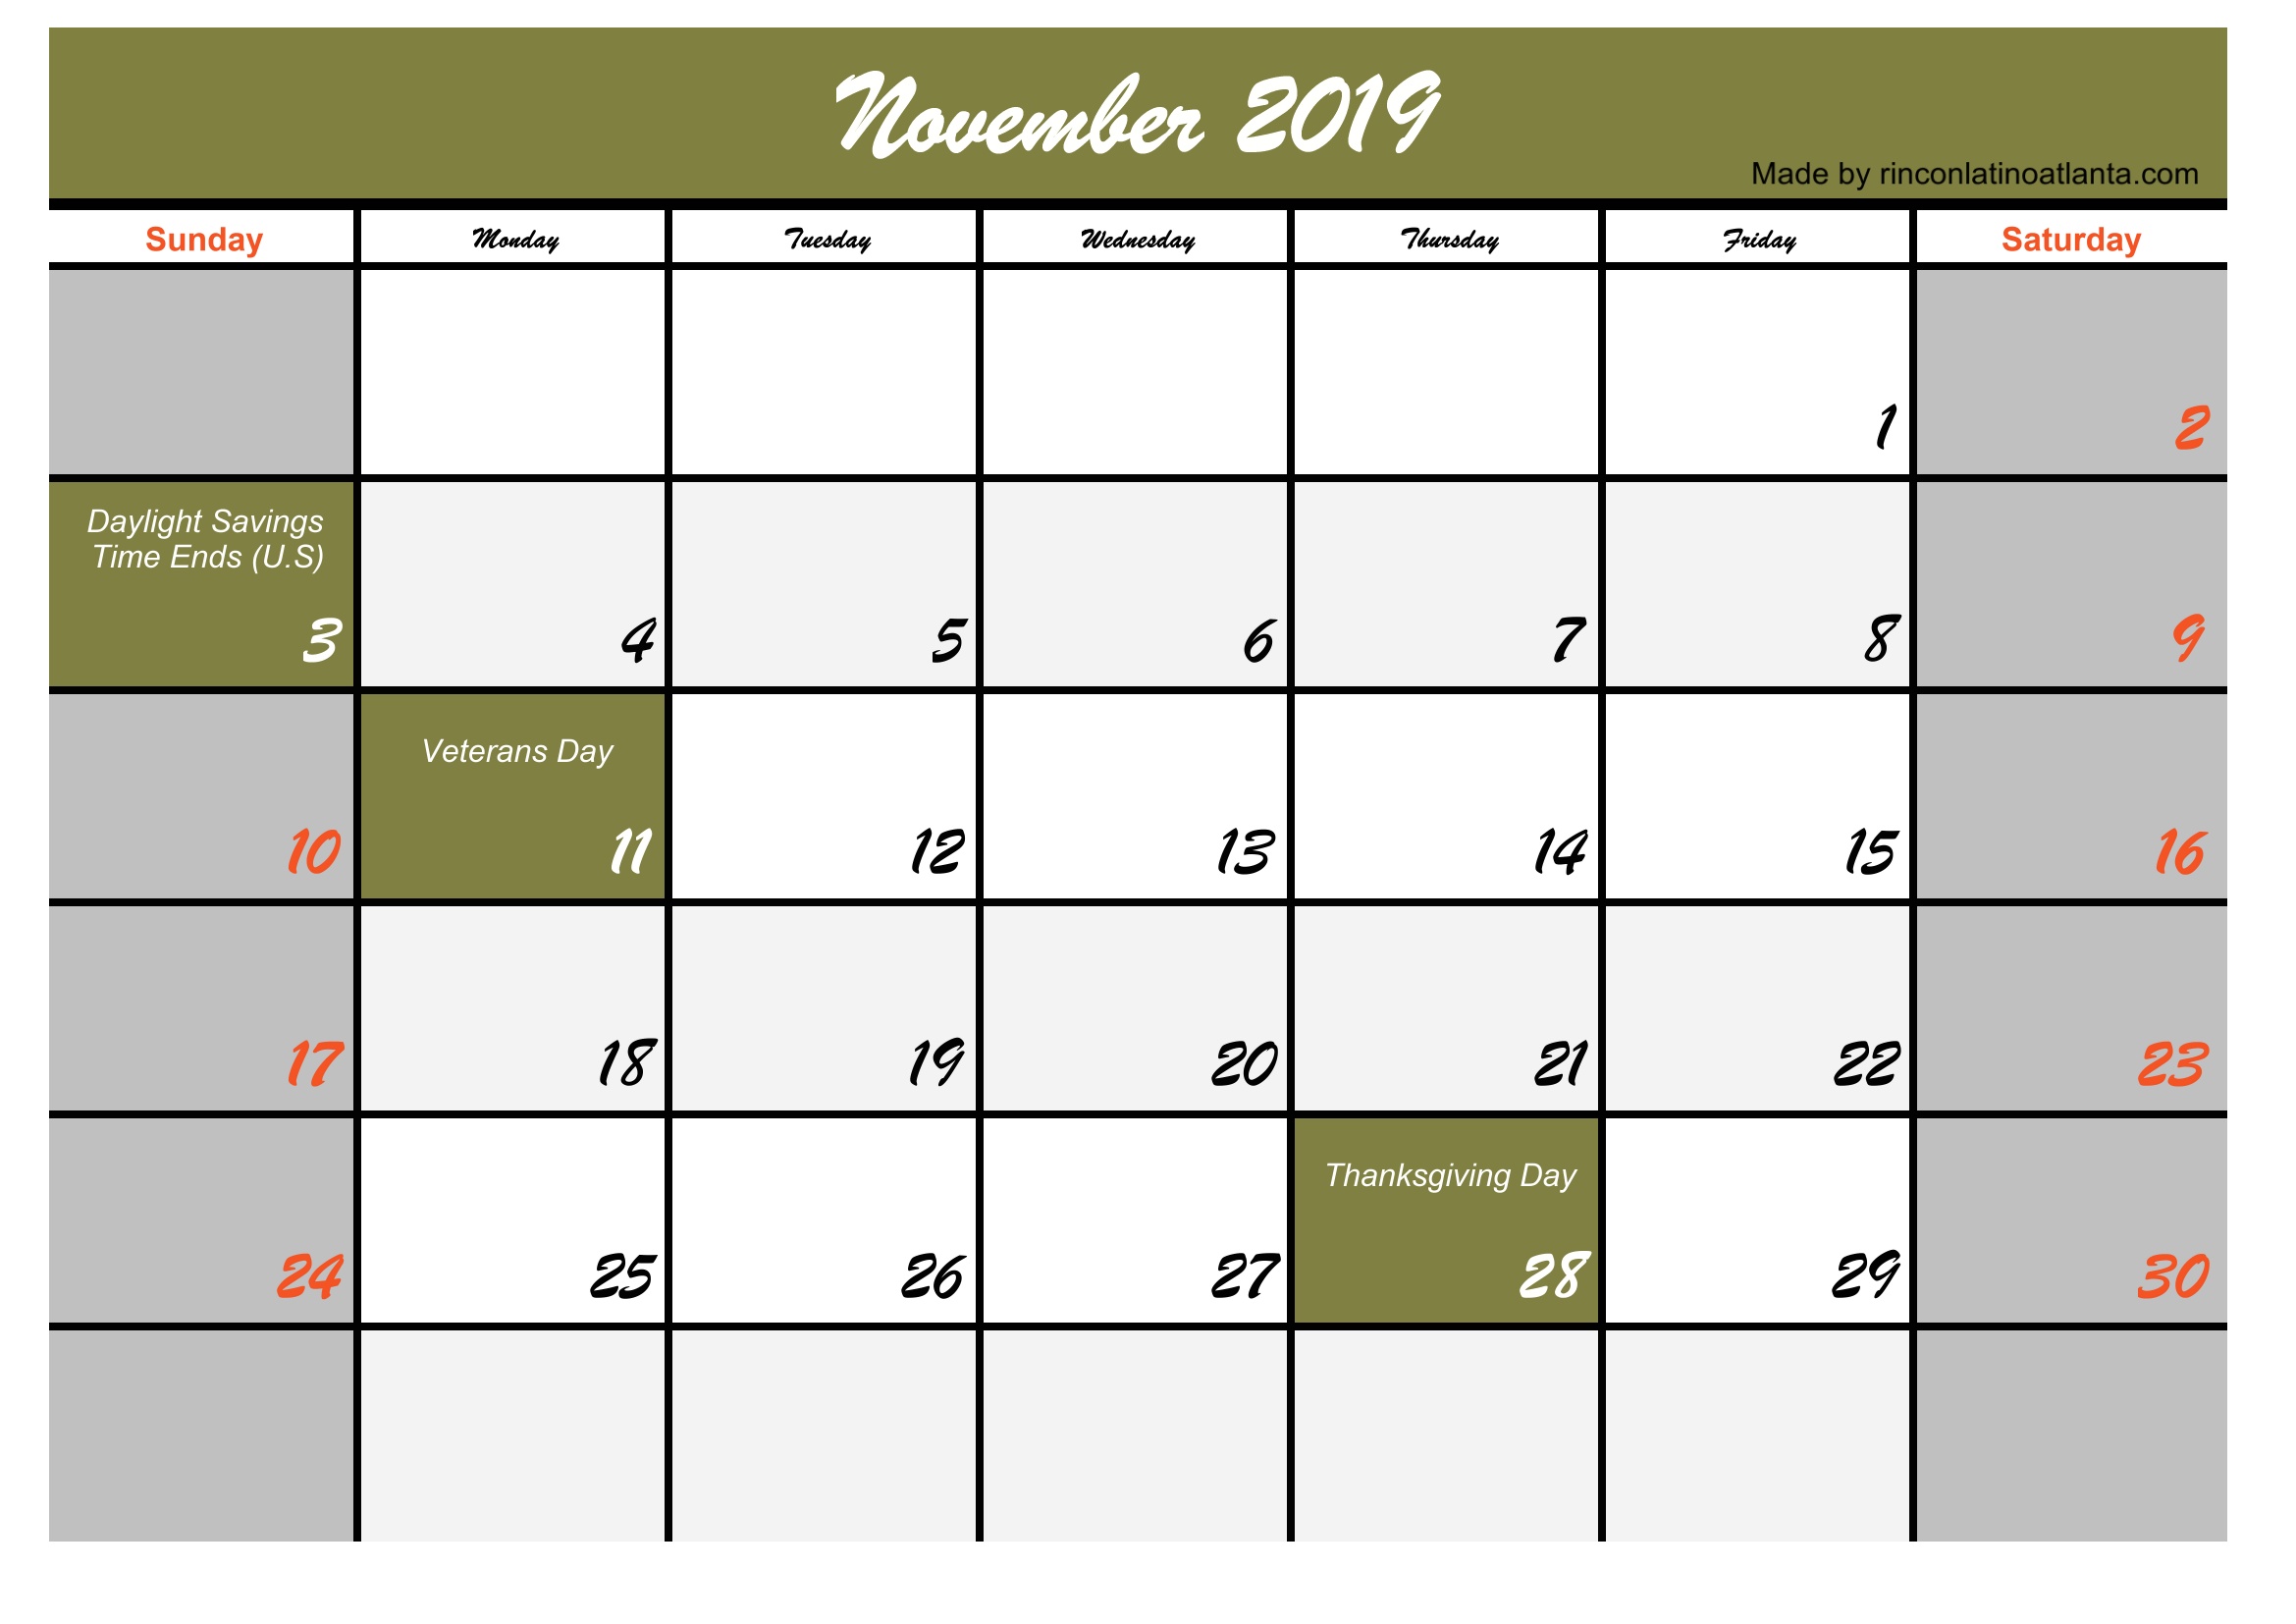 uk-bank-holidays-calendar-2019-national-holiday-calendar-national-holidays-uk-uk-bank-holiday